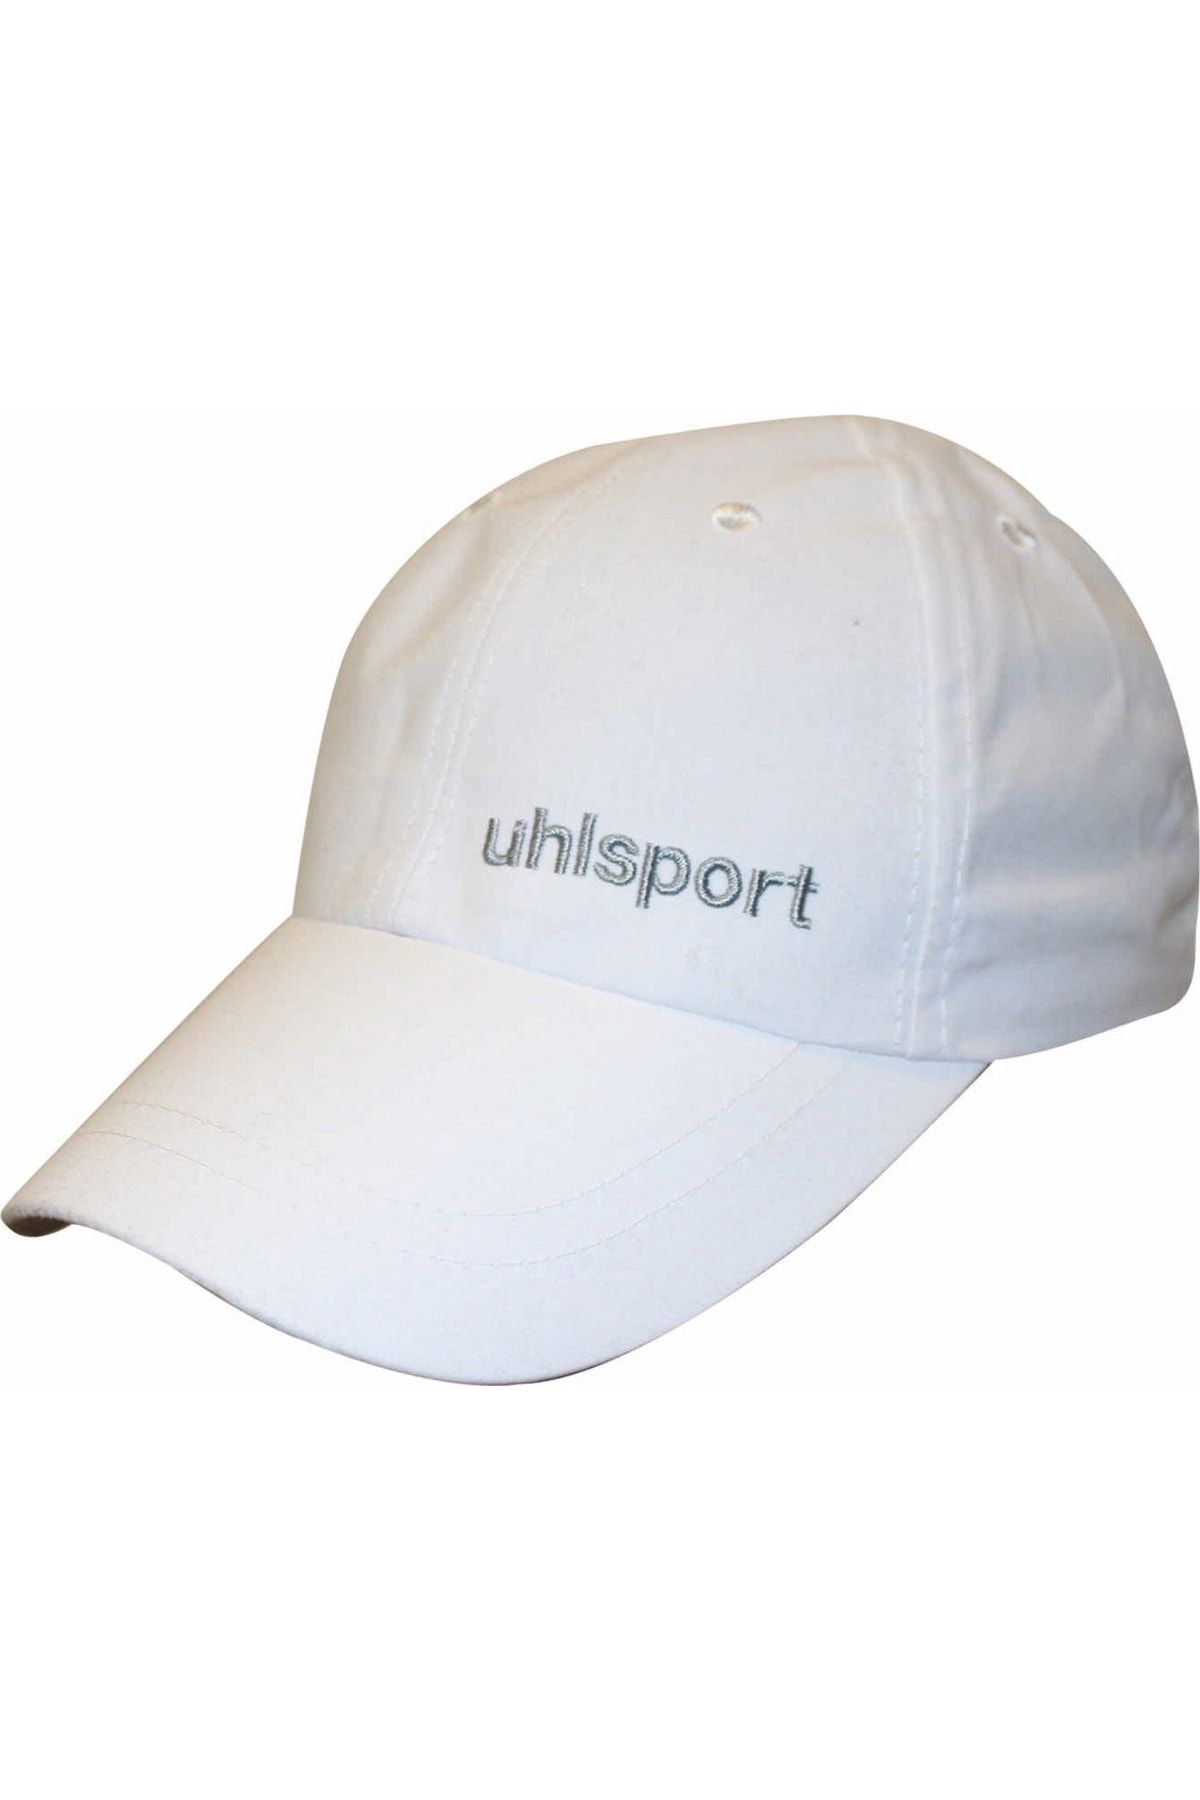 uhlsport 20.003 Mıcro Leo Unisex Şapka Beyaz 8201010